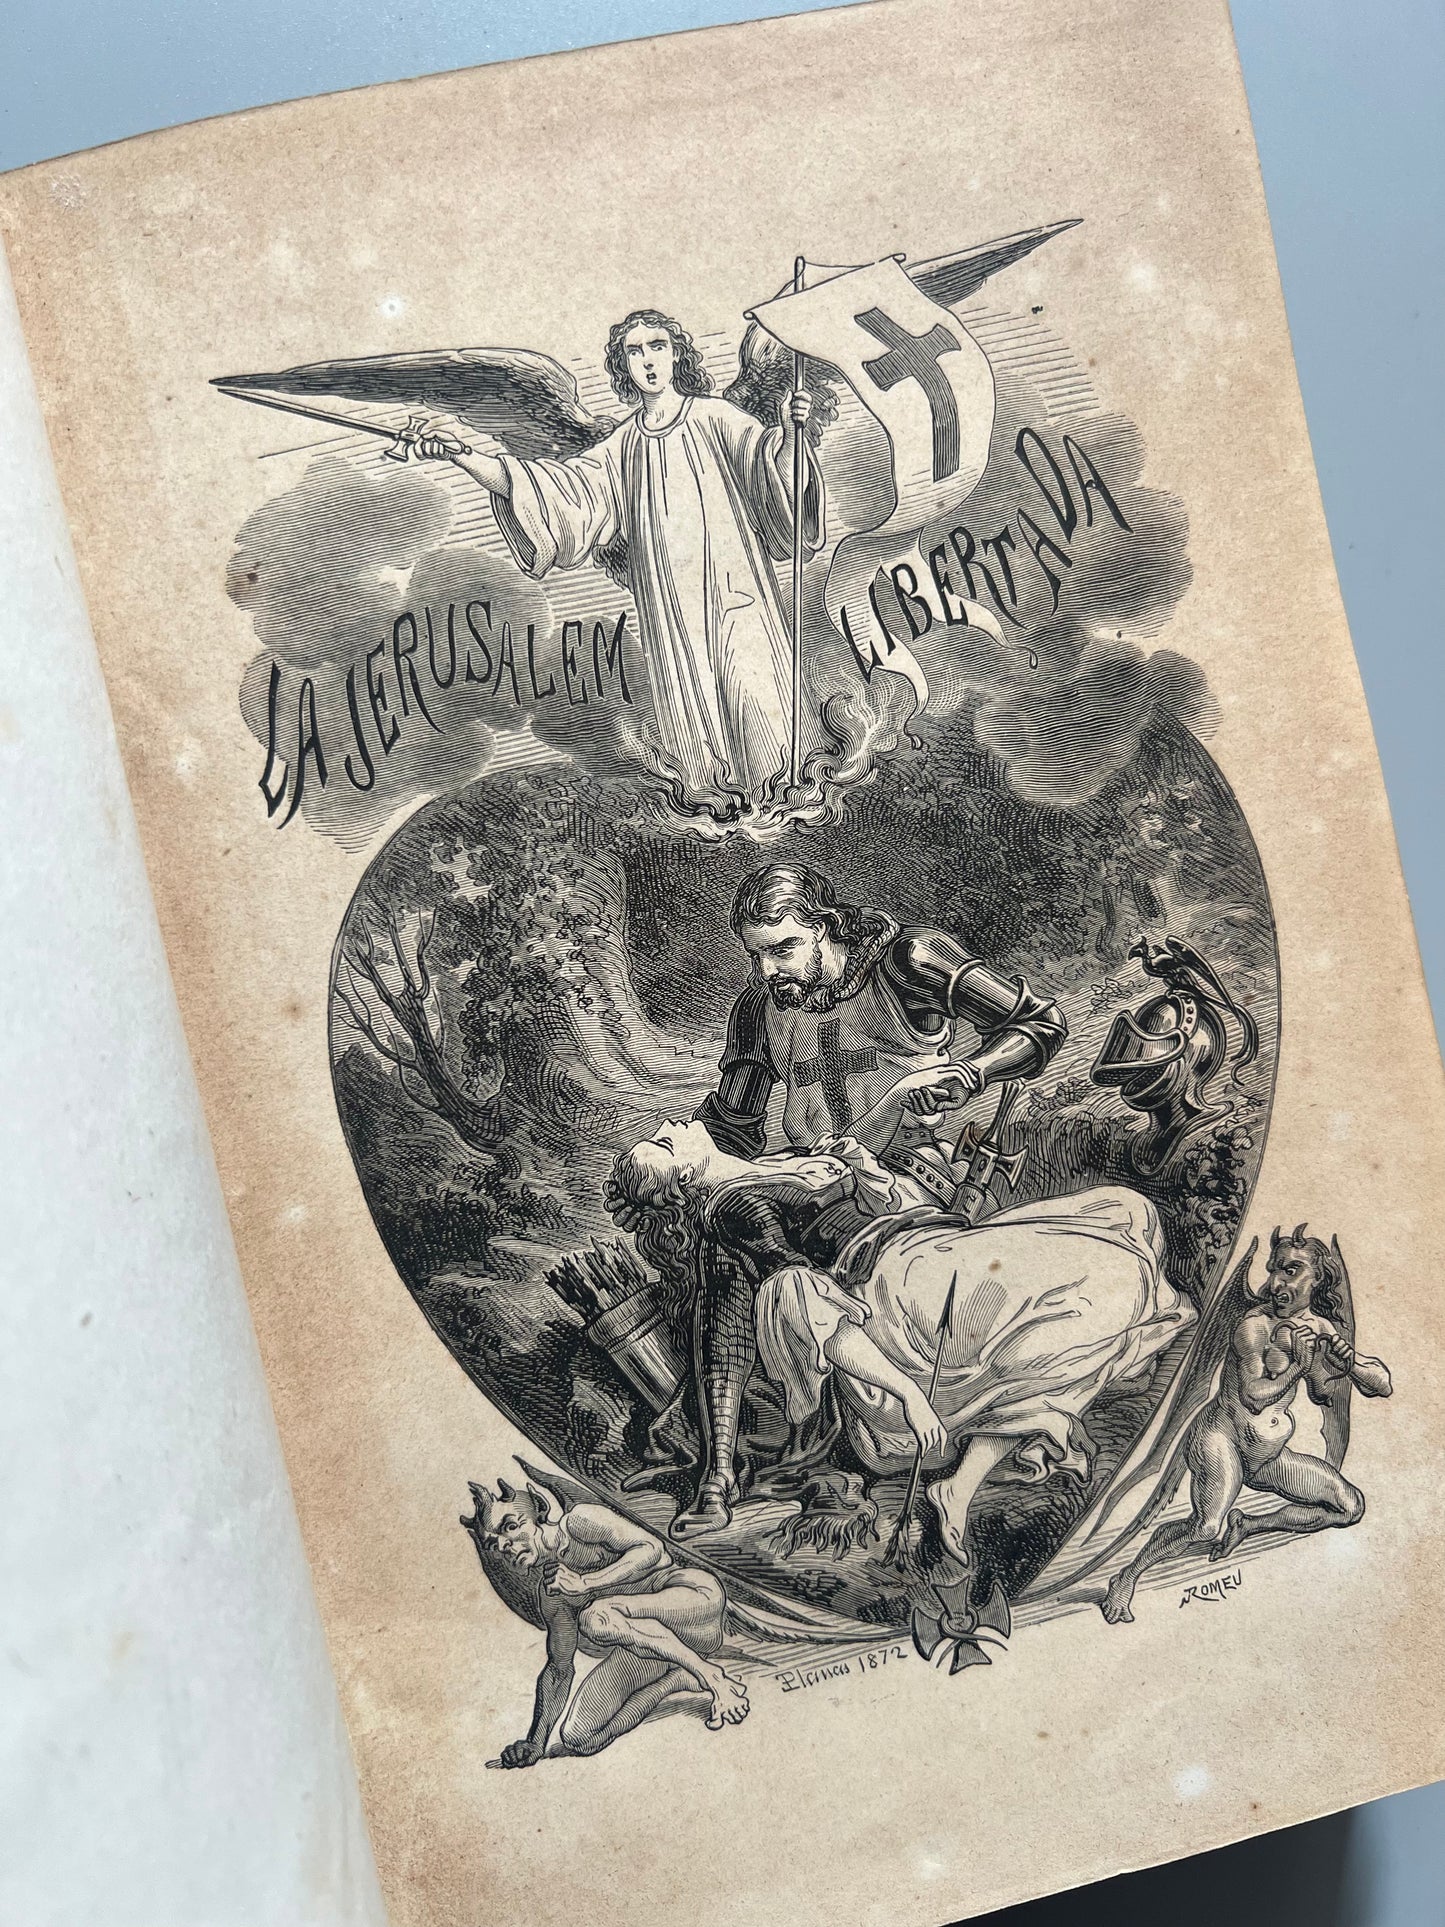 La Jerusalem libertada, Torcuato Tasso - Empresa editorial La Ilustración, 1873